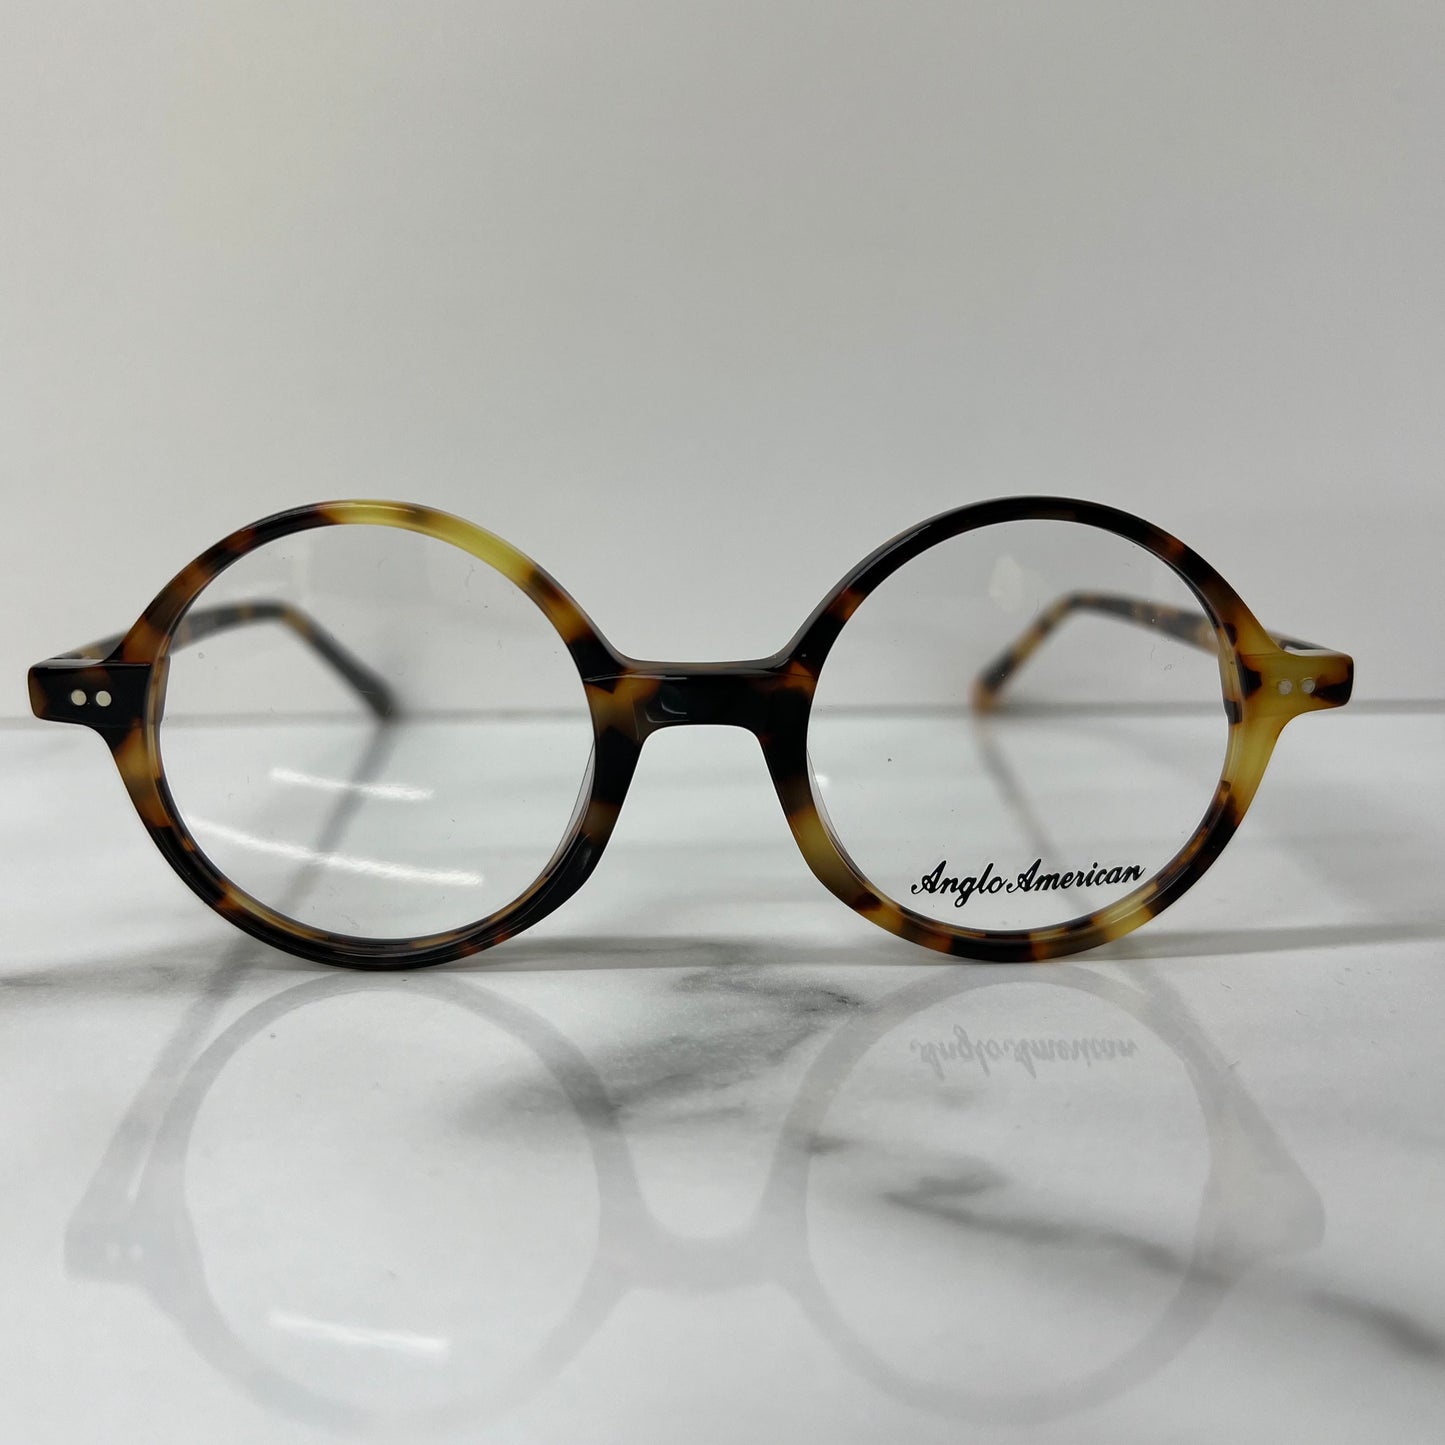 Anglo American 400 Optical Glasses Frames Tortoise Shell 45mm England Eyeglasses